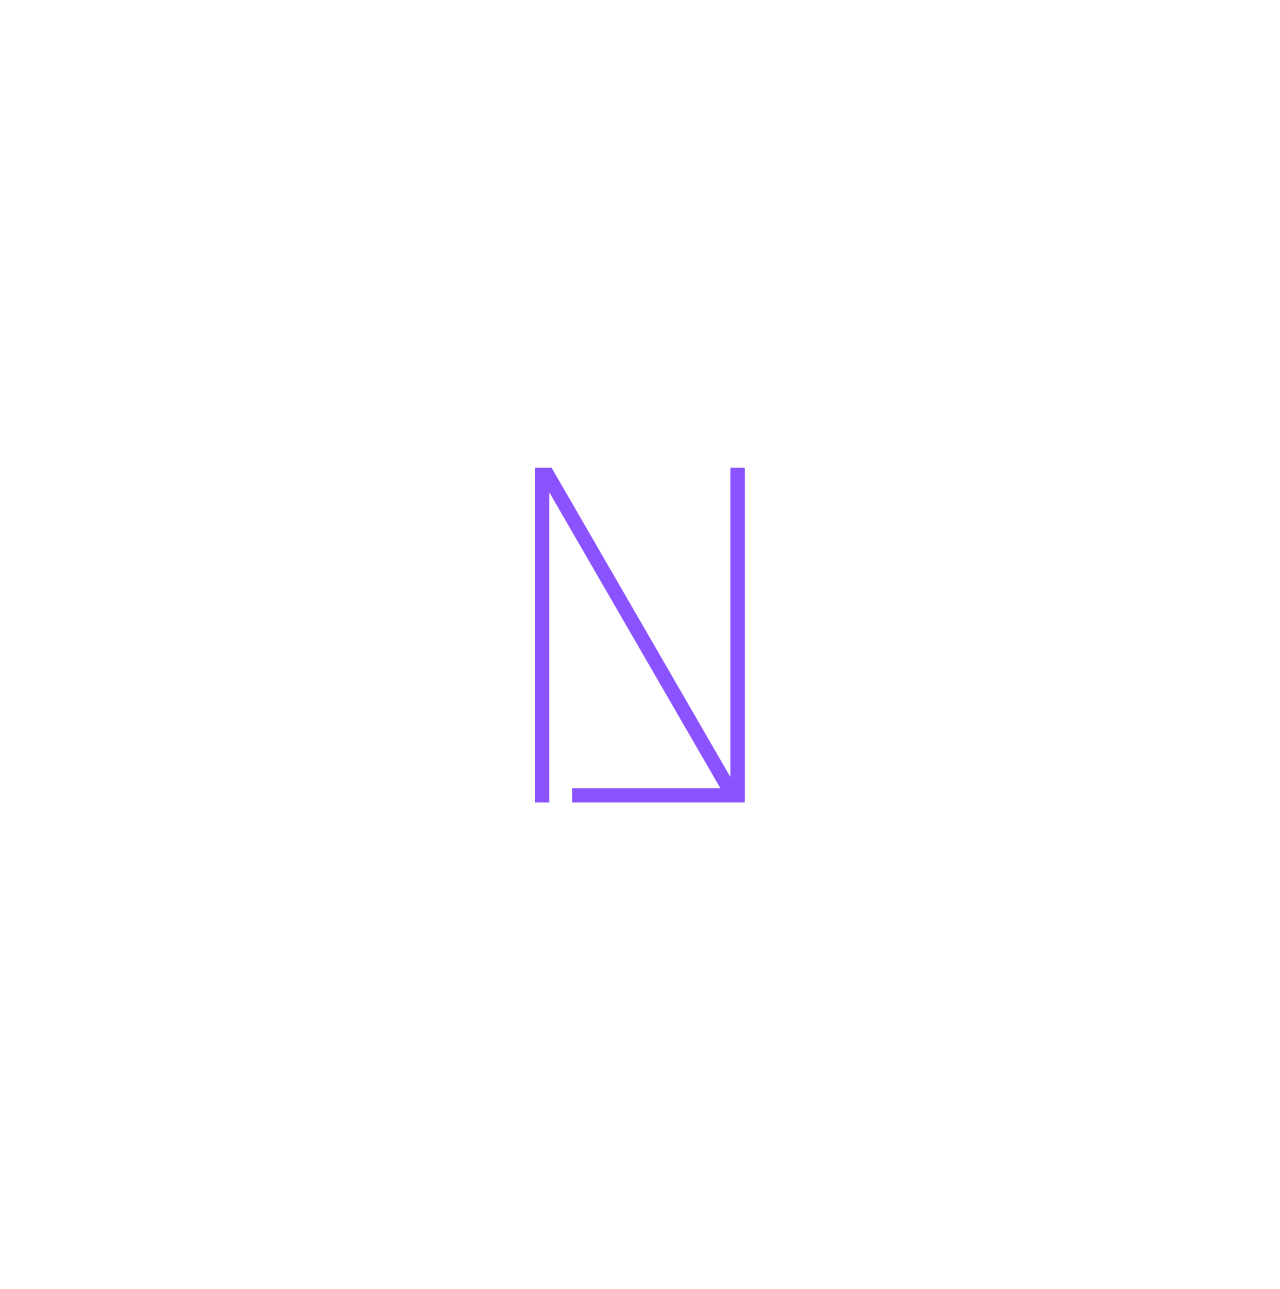 NAVIC's web page